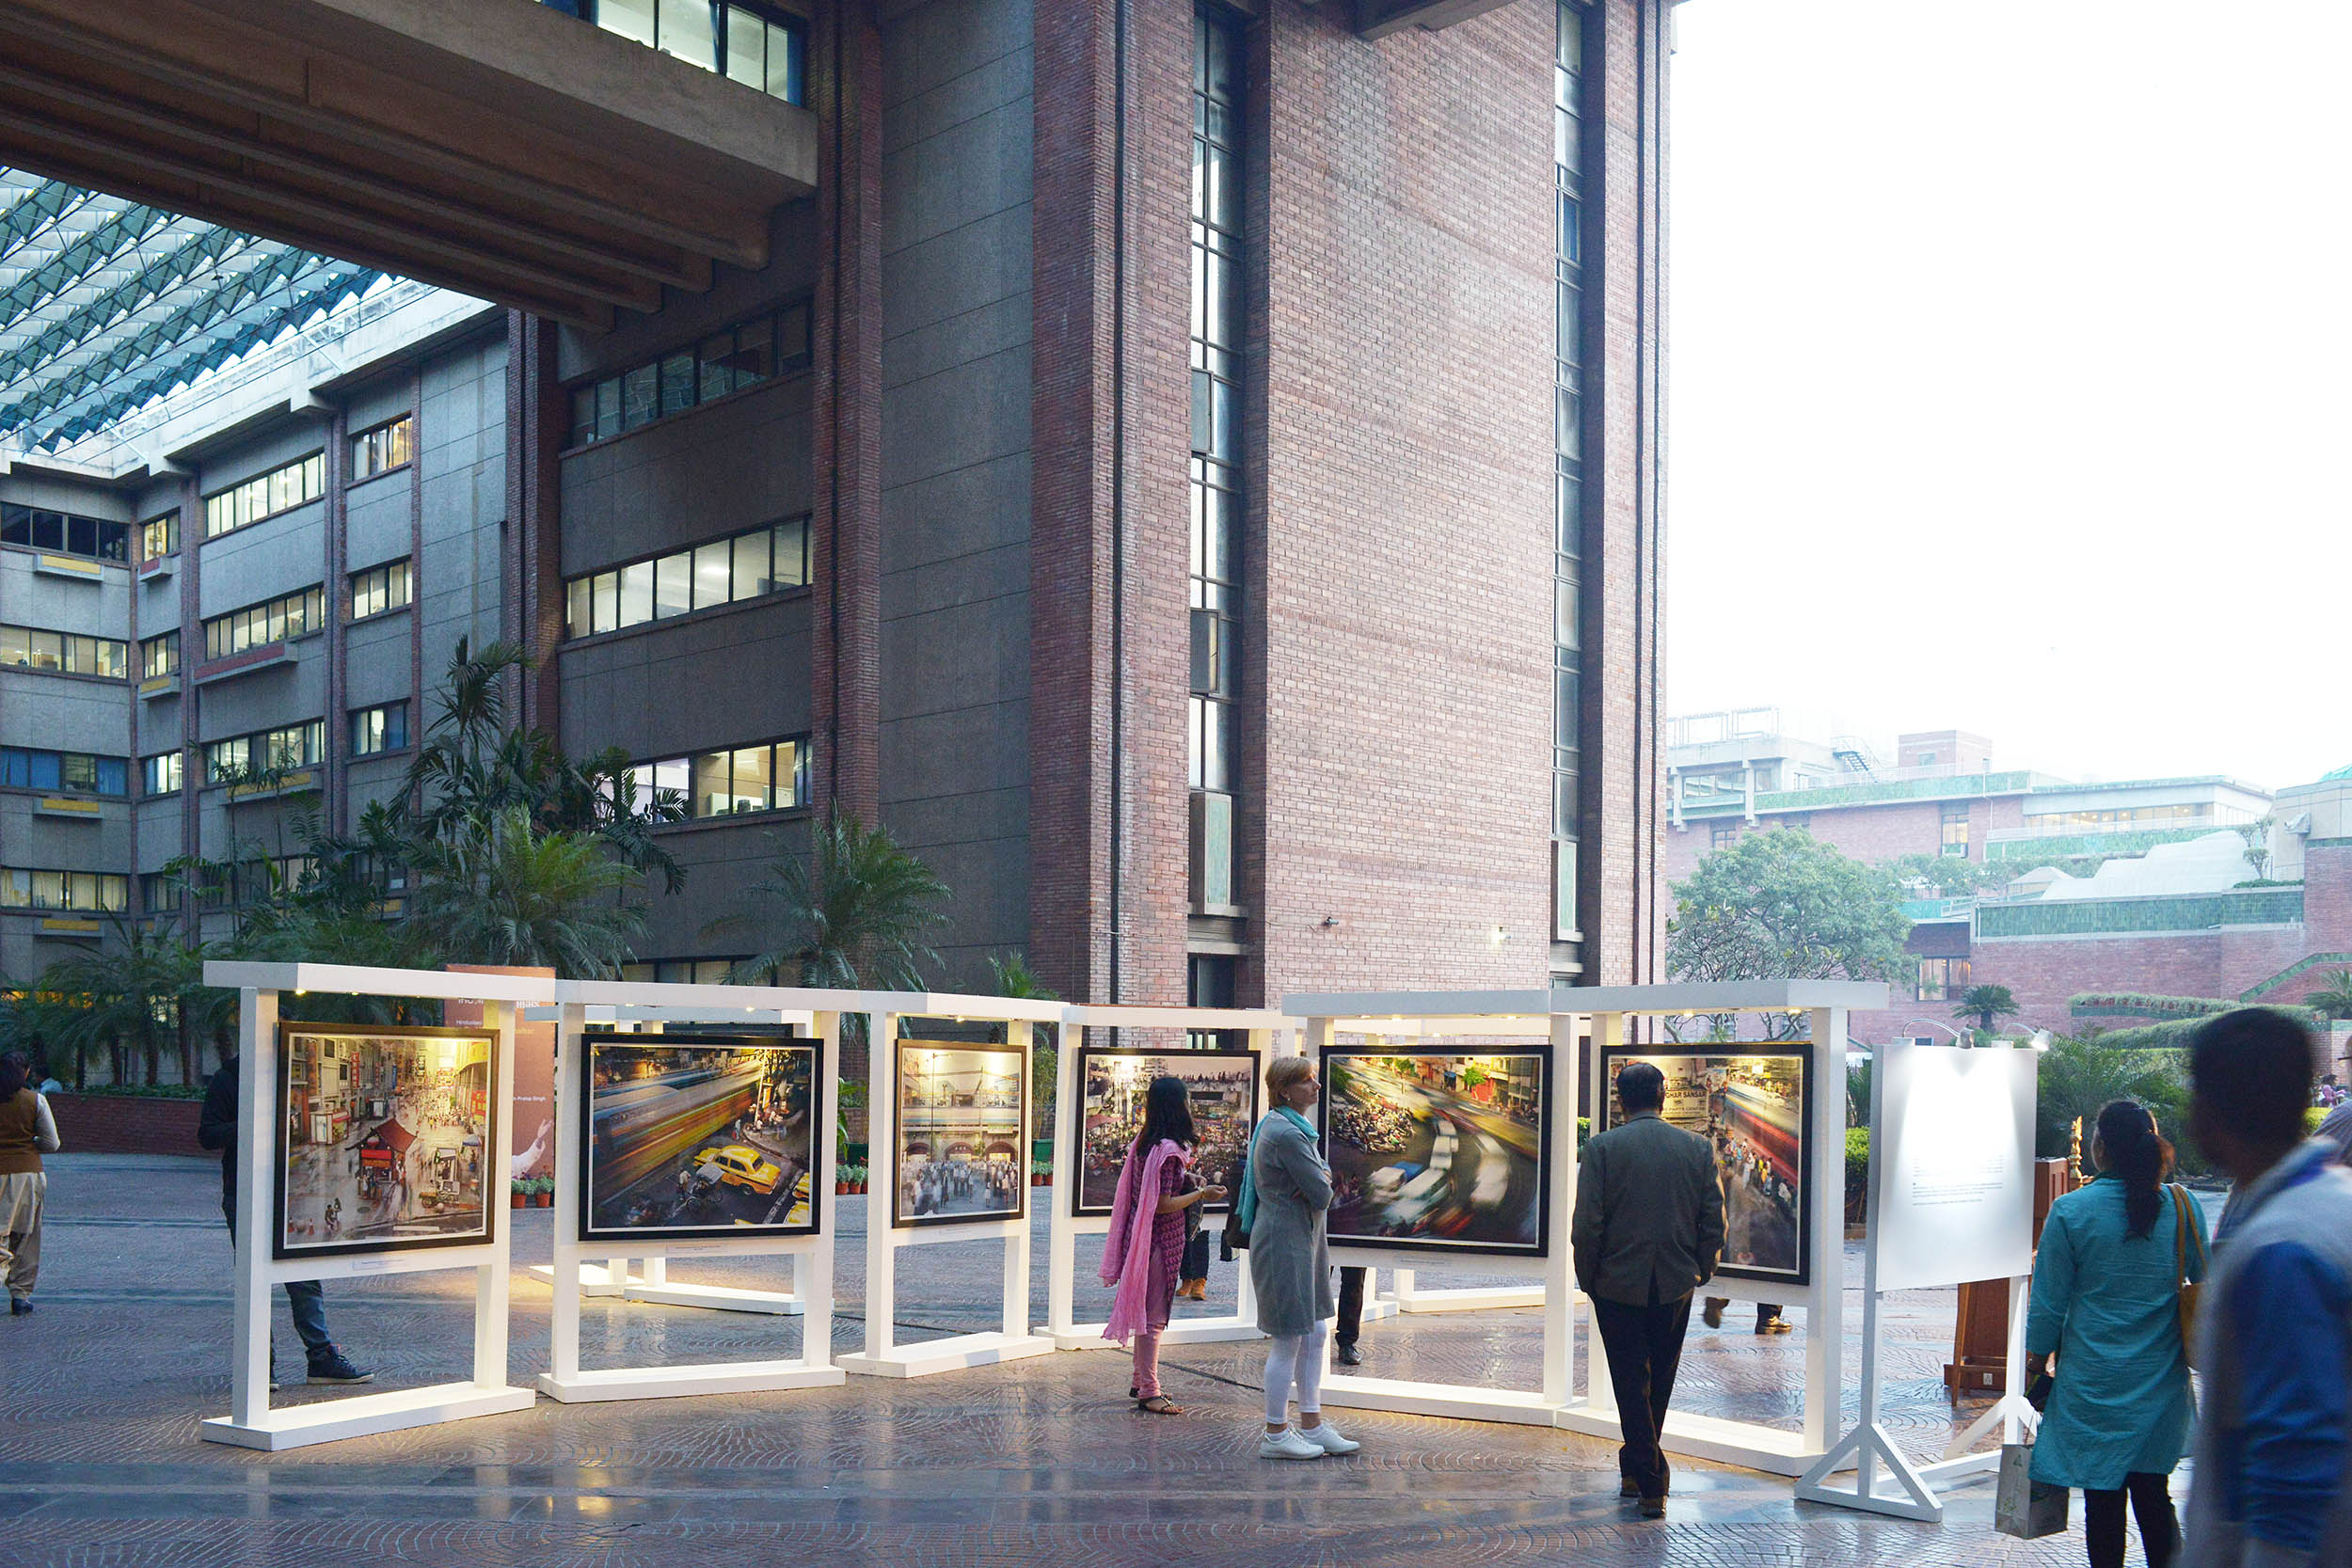 India Habitat Centre – Visual Arts Gallery, New Delhi